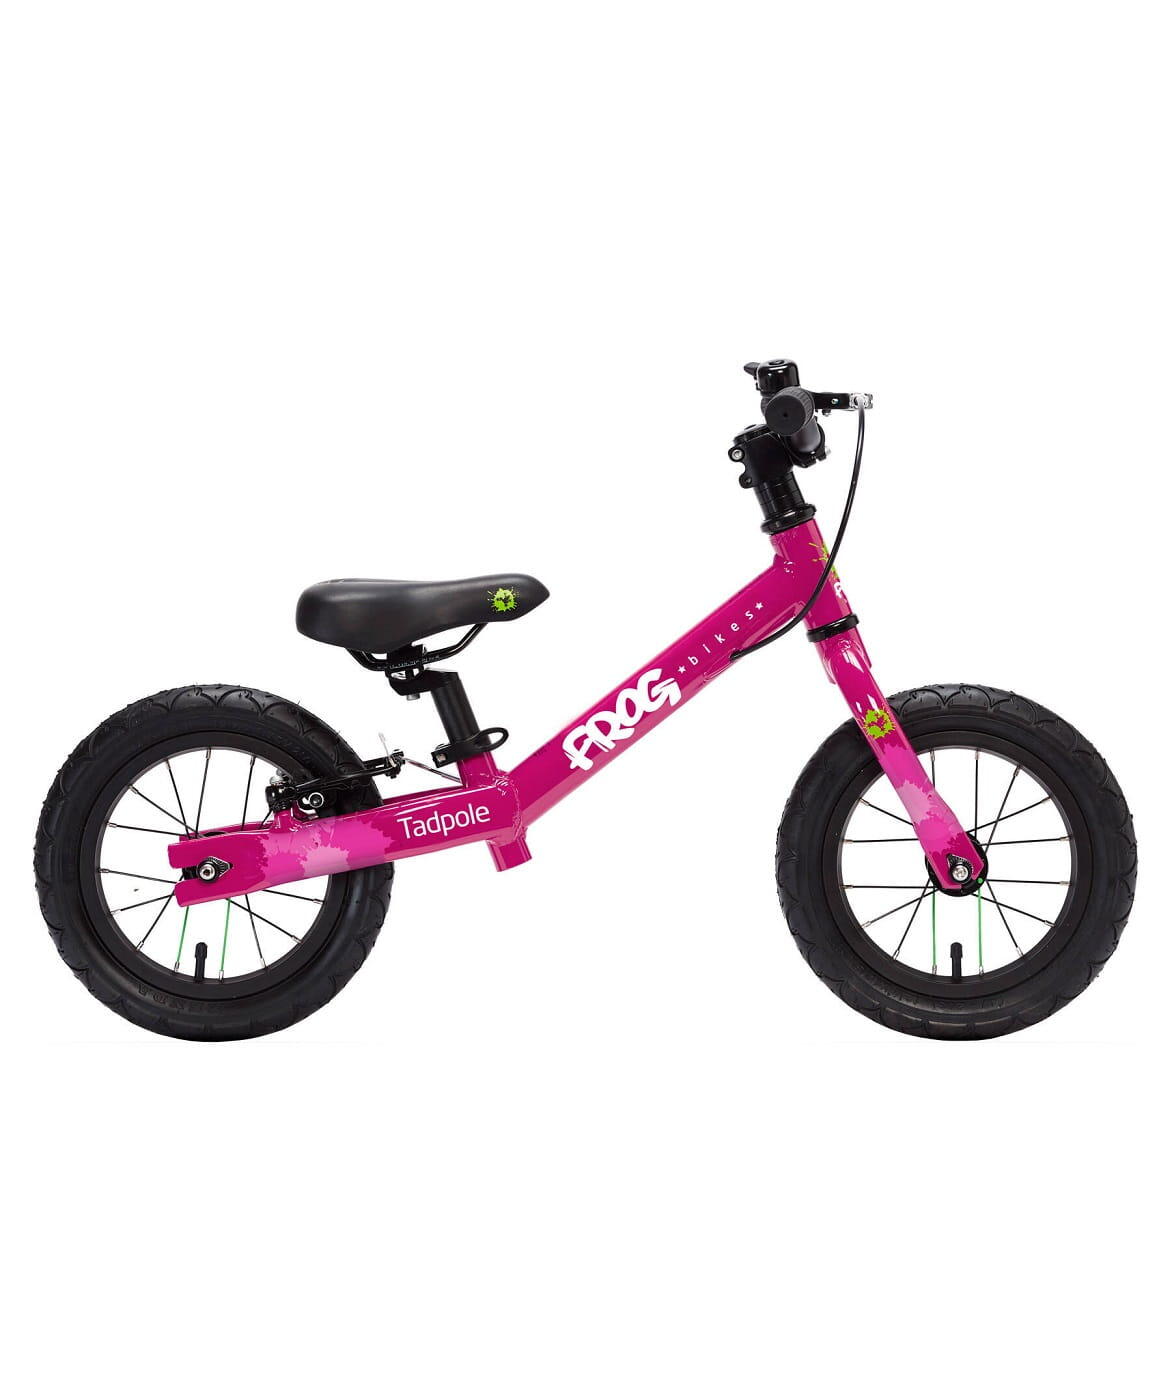 FROG BIKES Tadpole 12 Inch Lightweight Kids Balance Bike For 2-3 Years - Pink